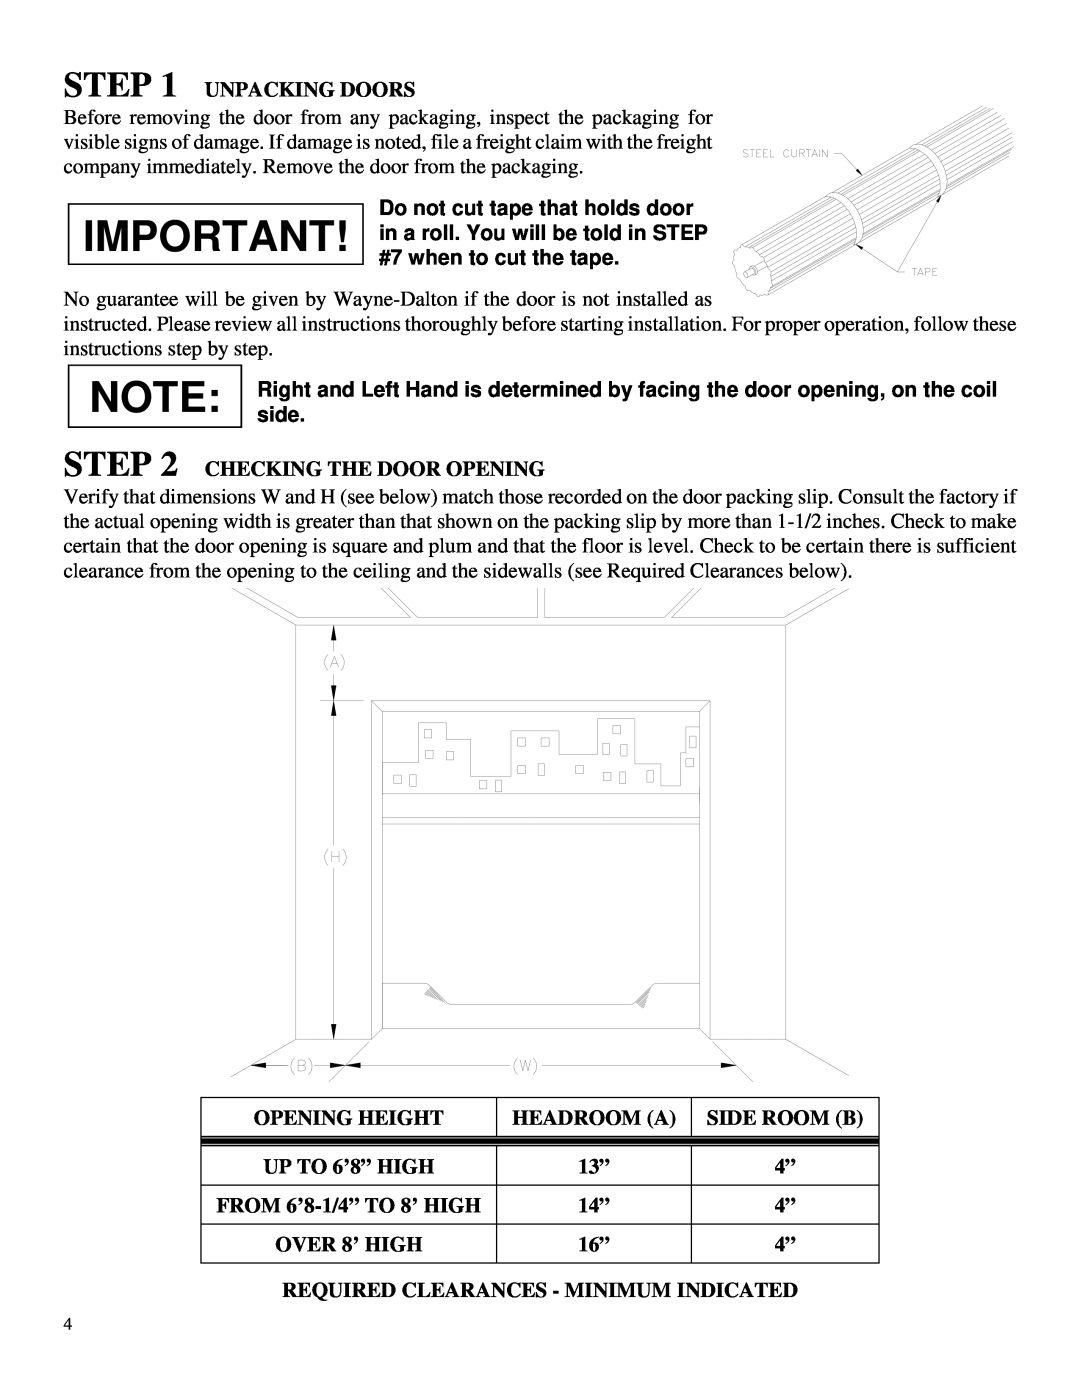 Wayne-Dalton DS-50, DS-75, DS-100 installation instructions Unpacking Doors 